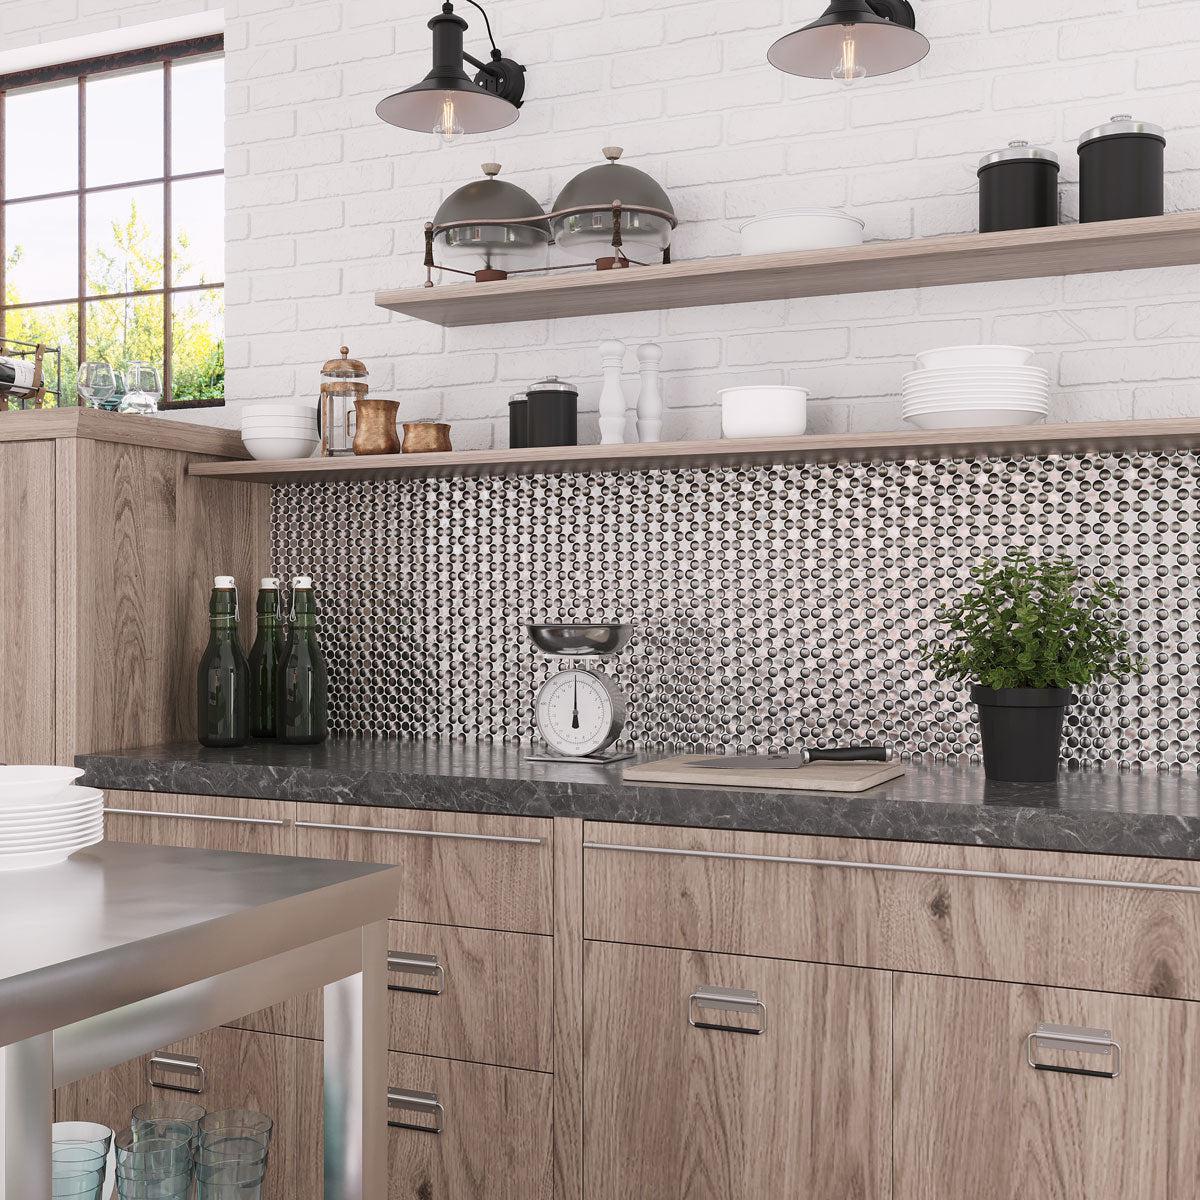 Rustic Industrial Kitchen with Stainless Steel Penny Pebble Metal Mosaic Tile Backsplash